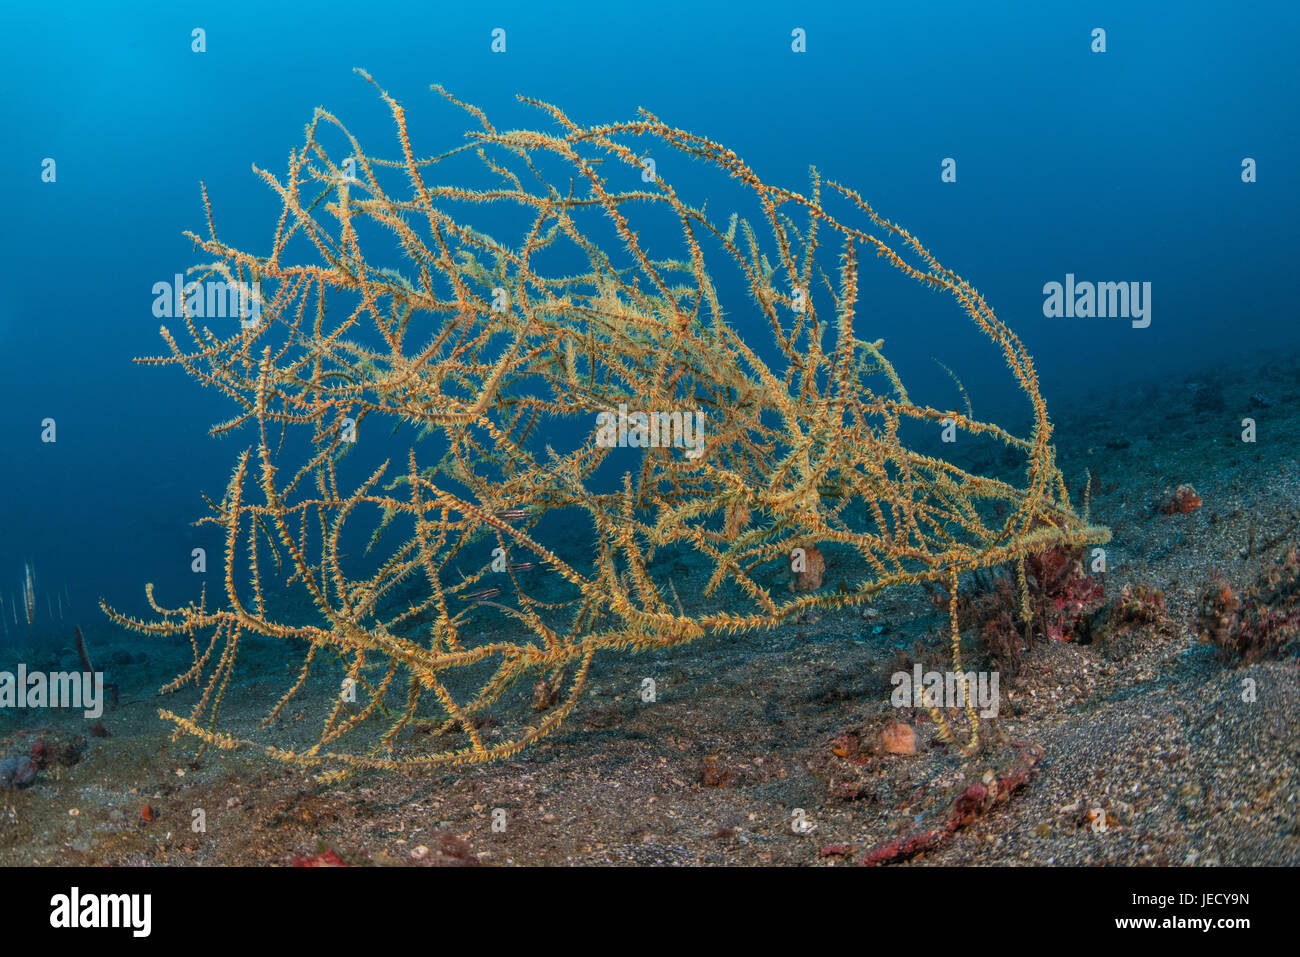 Tozeuma or sawblade shrimp (Tozeuma armatum) sitting on a Black coral bush in Lembeh Strait / Indonesia Stock Photo